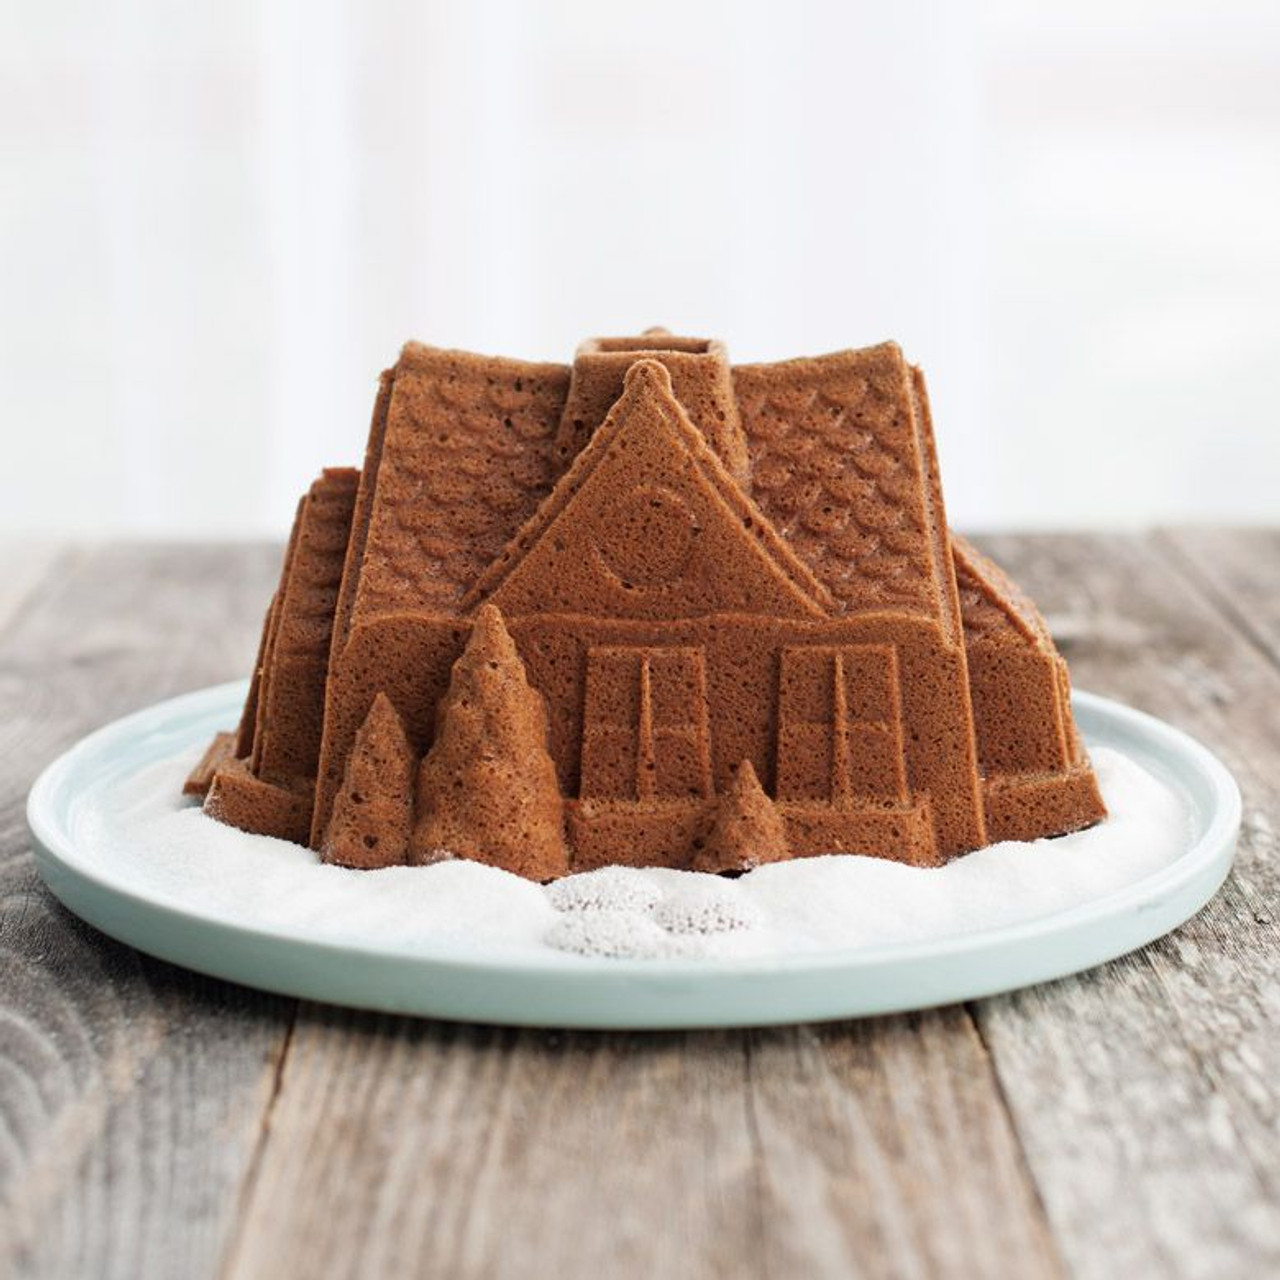 Nordic Ware Gingerbread House Bundt Pan 